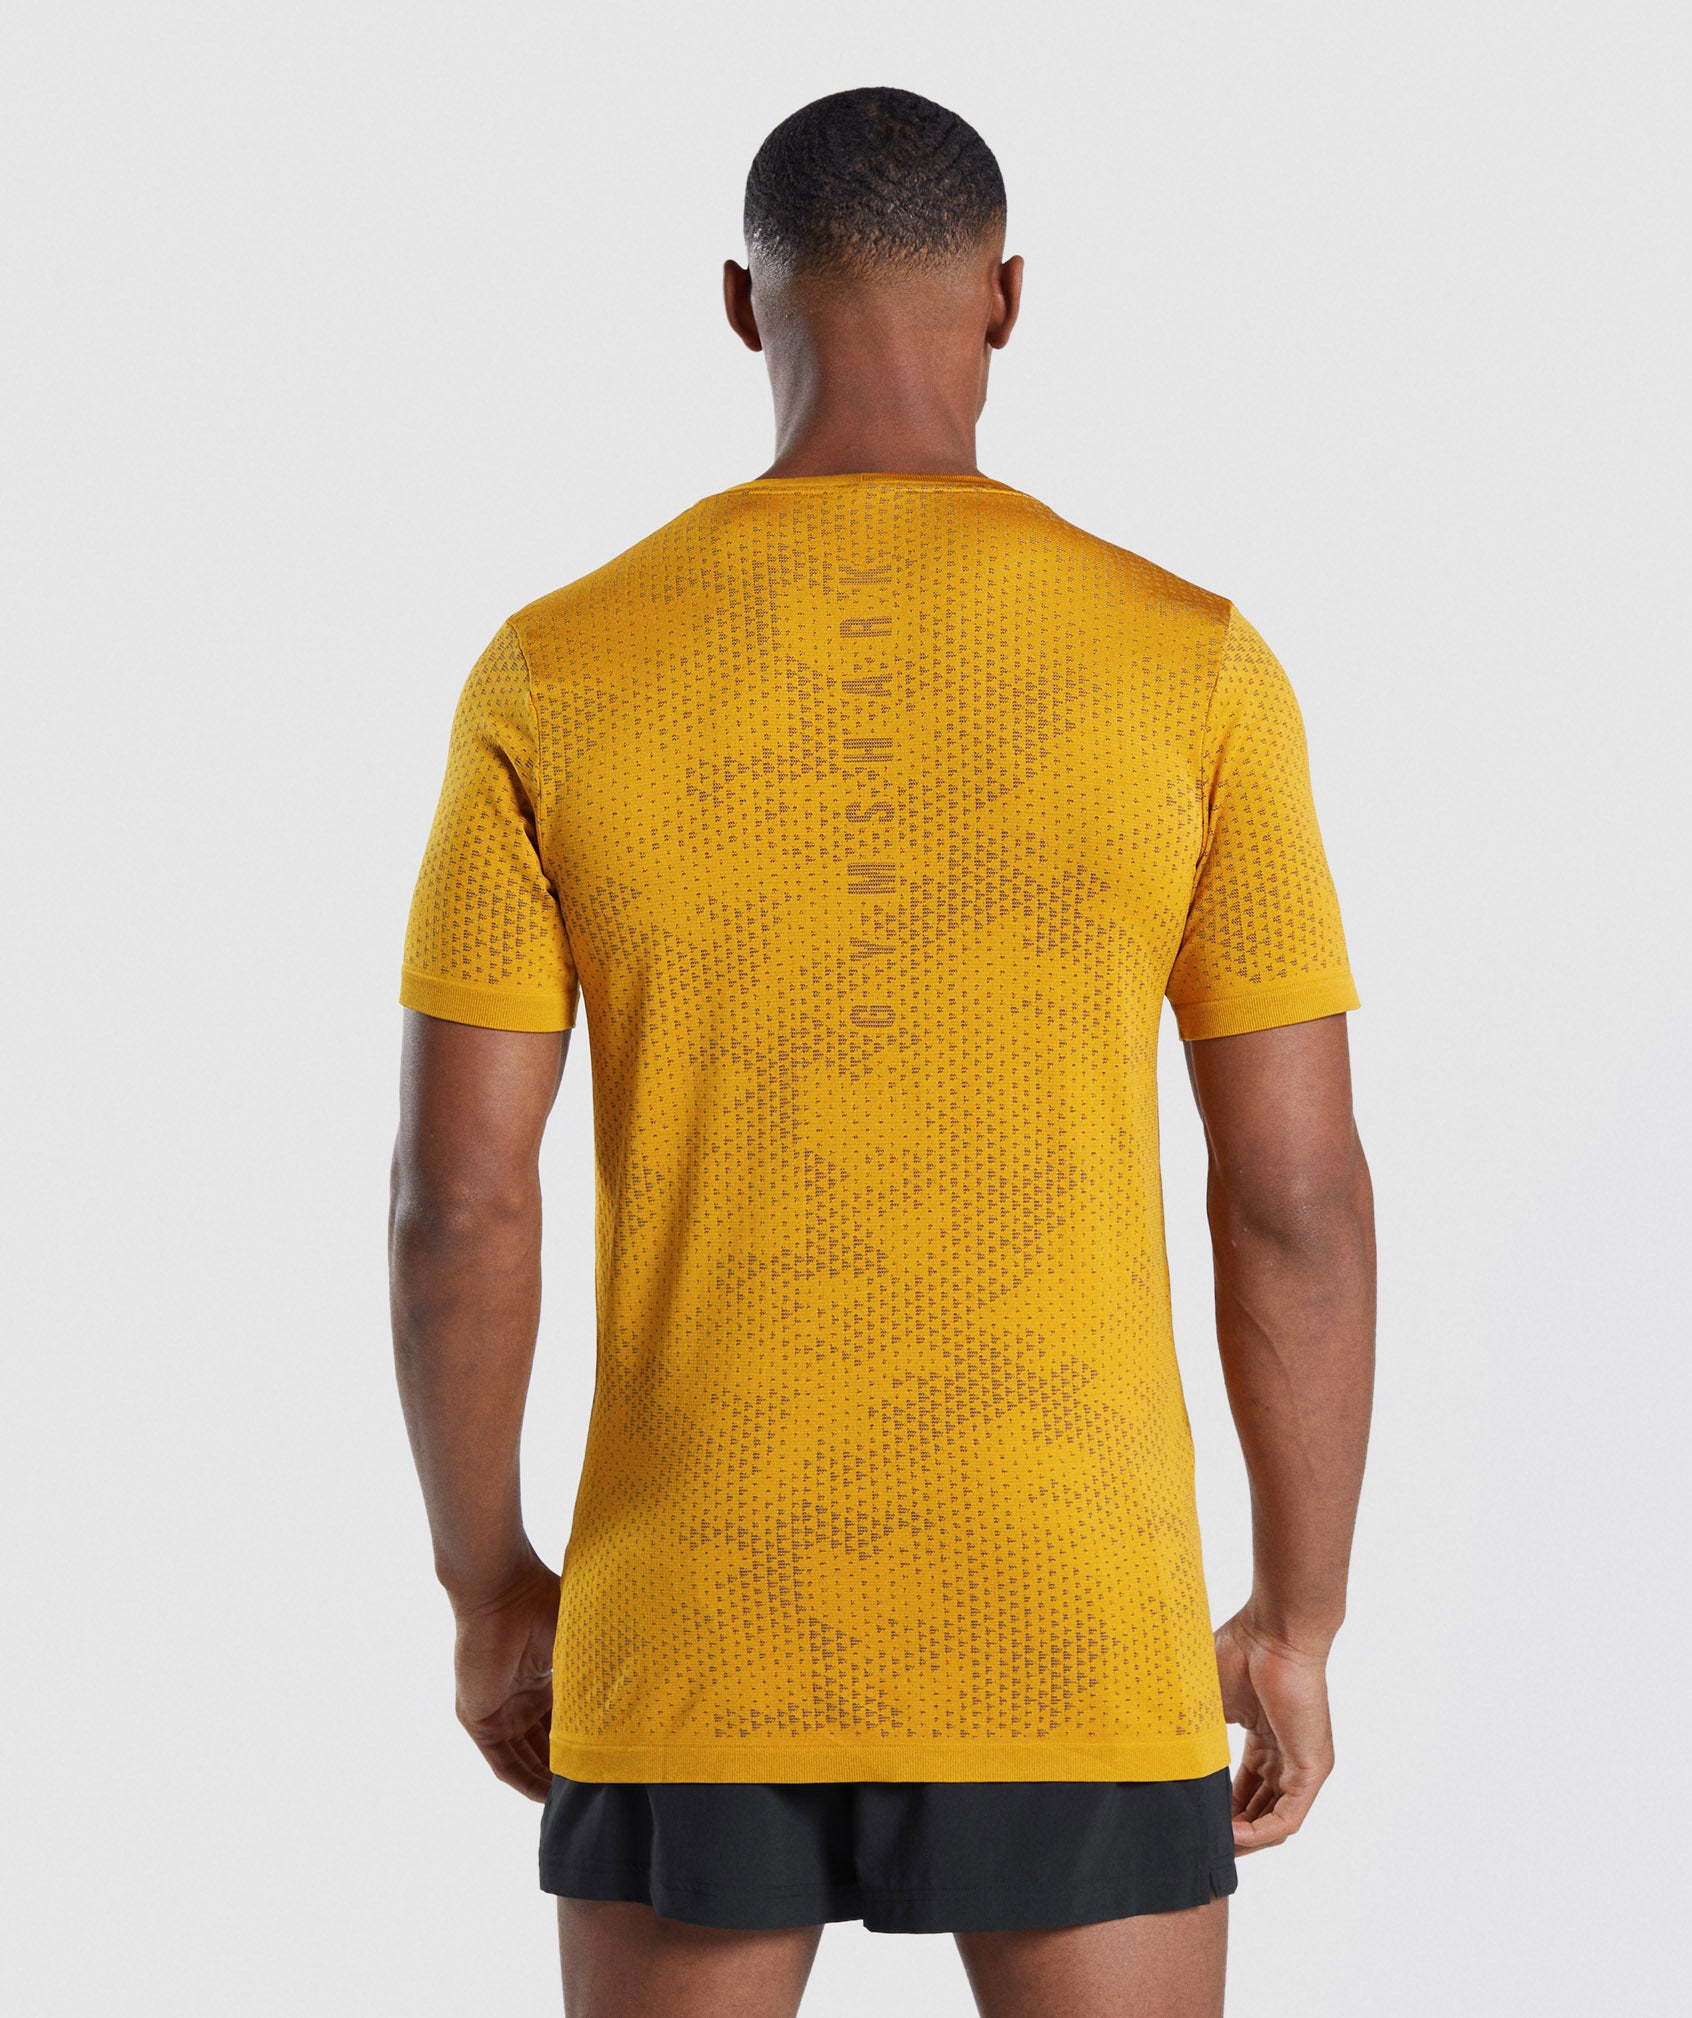 Sport Seamless T-Shirt in Turmeric Yellow/Black - view 2